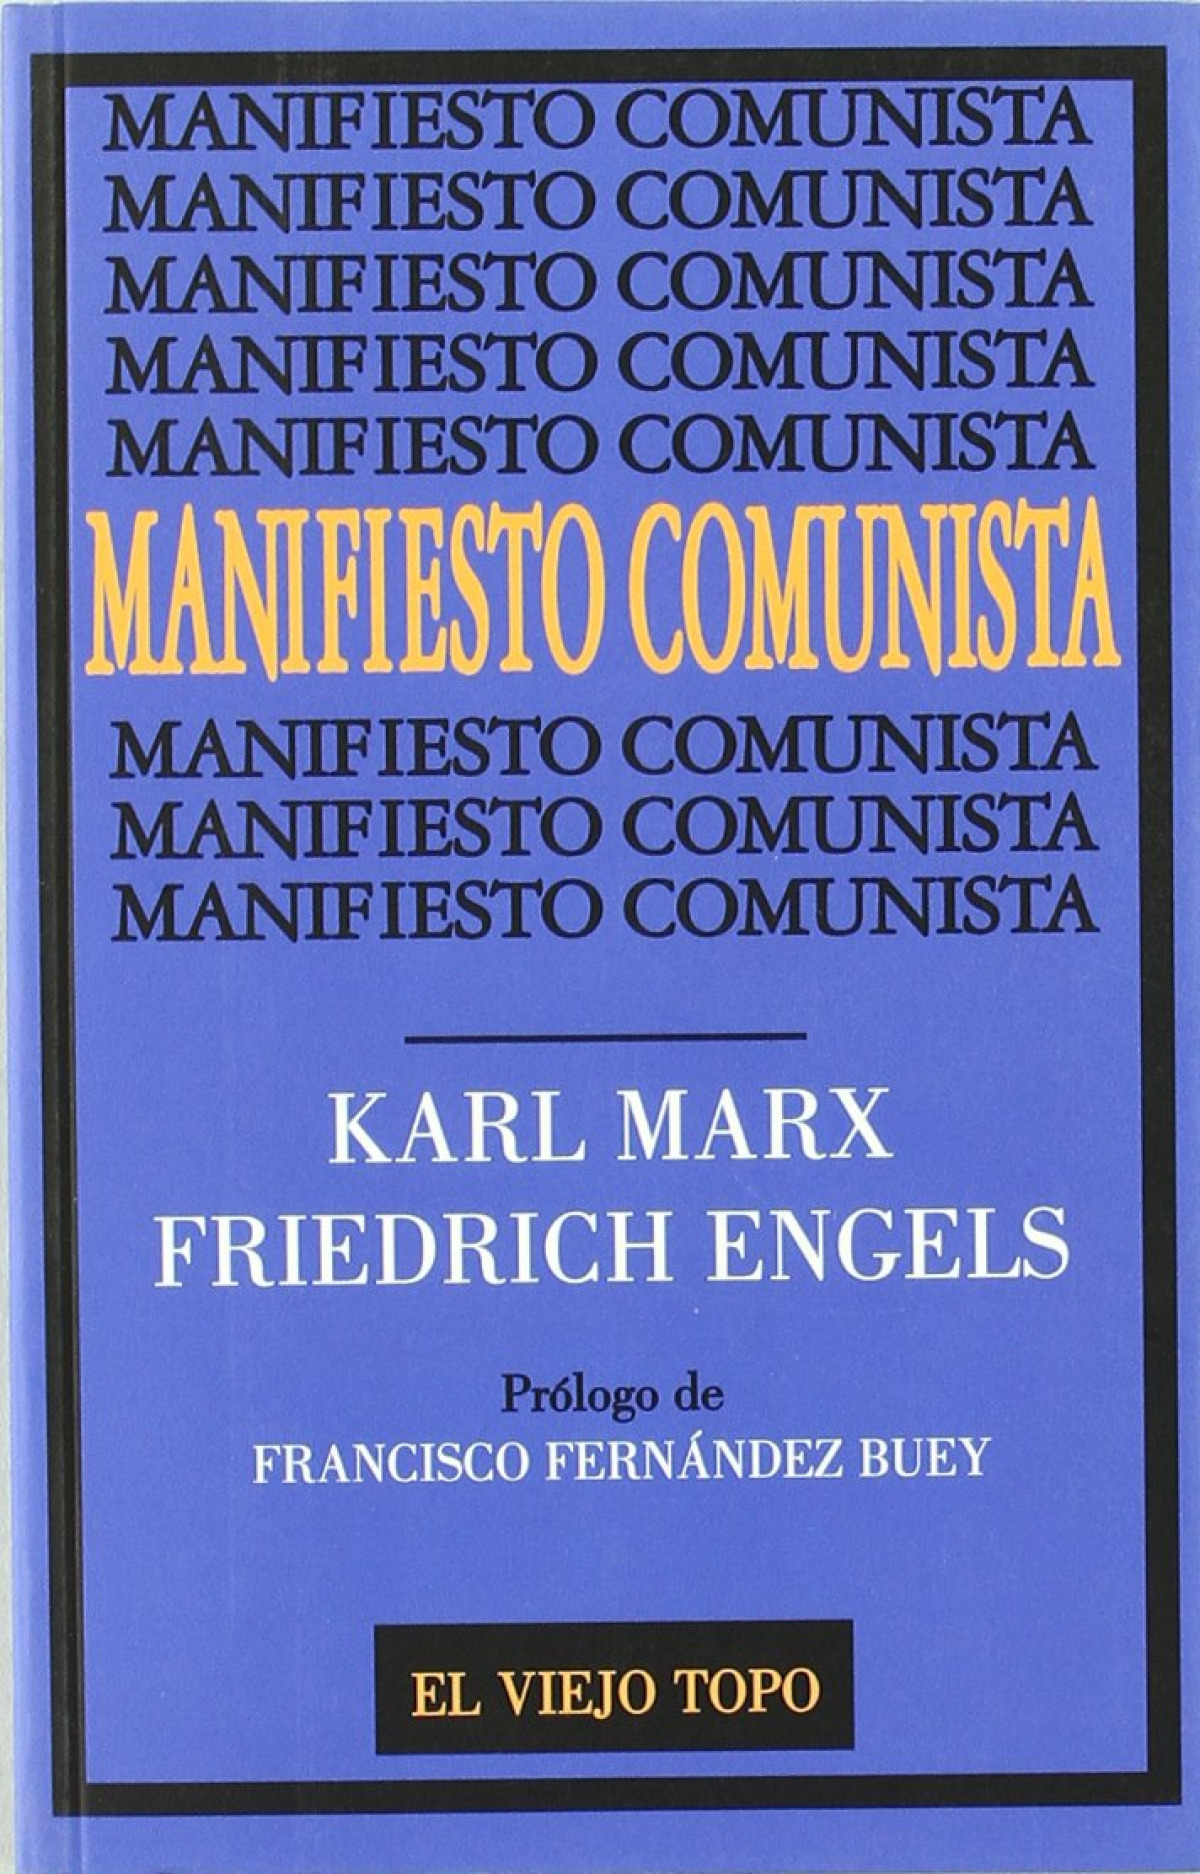 Manifiesto comunista - Marx I Engels